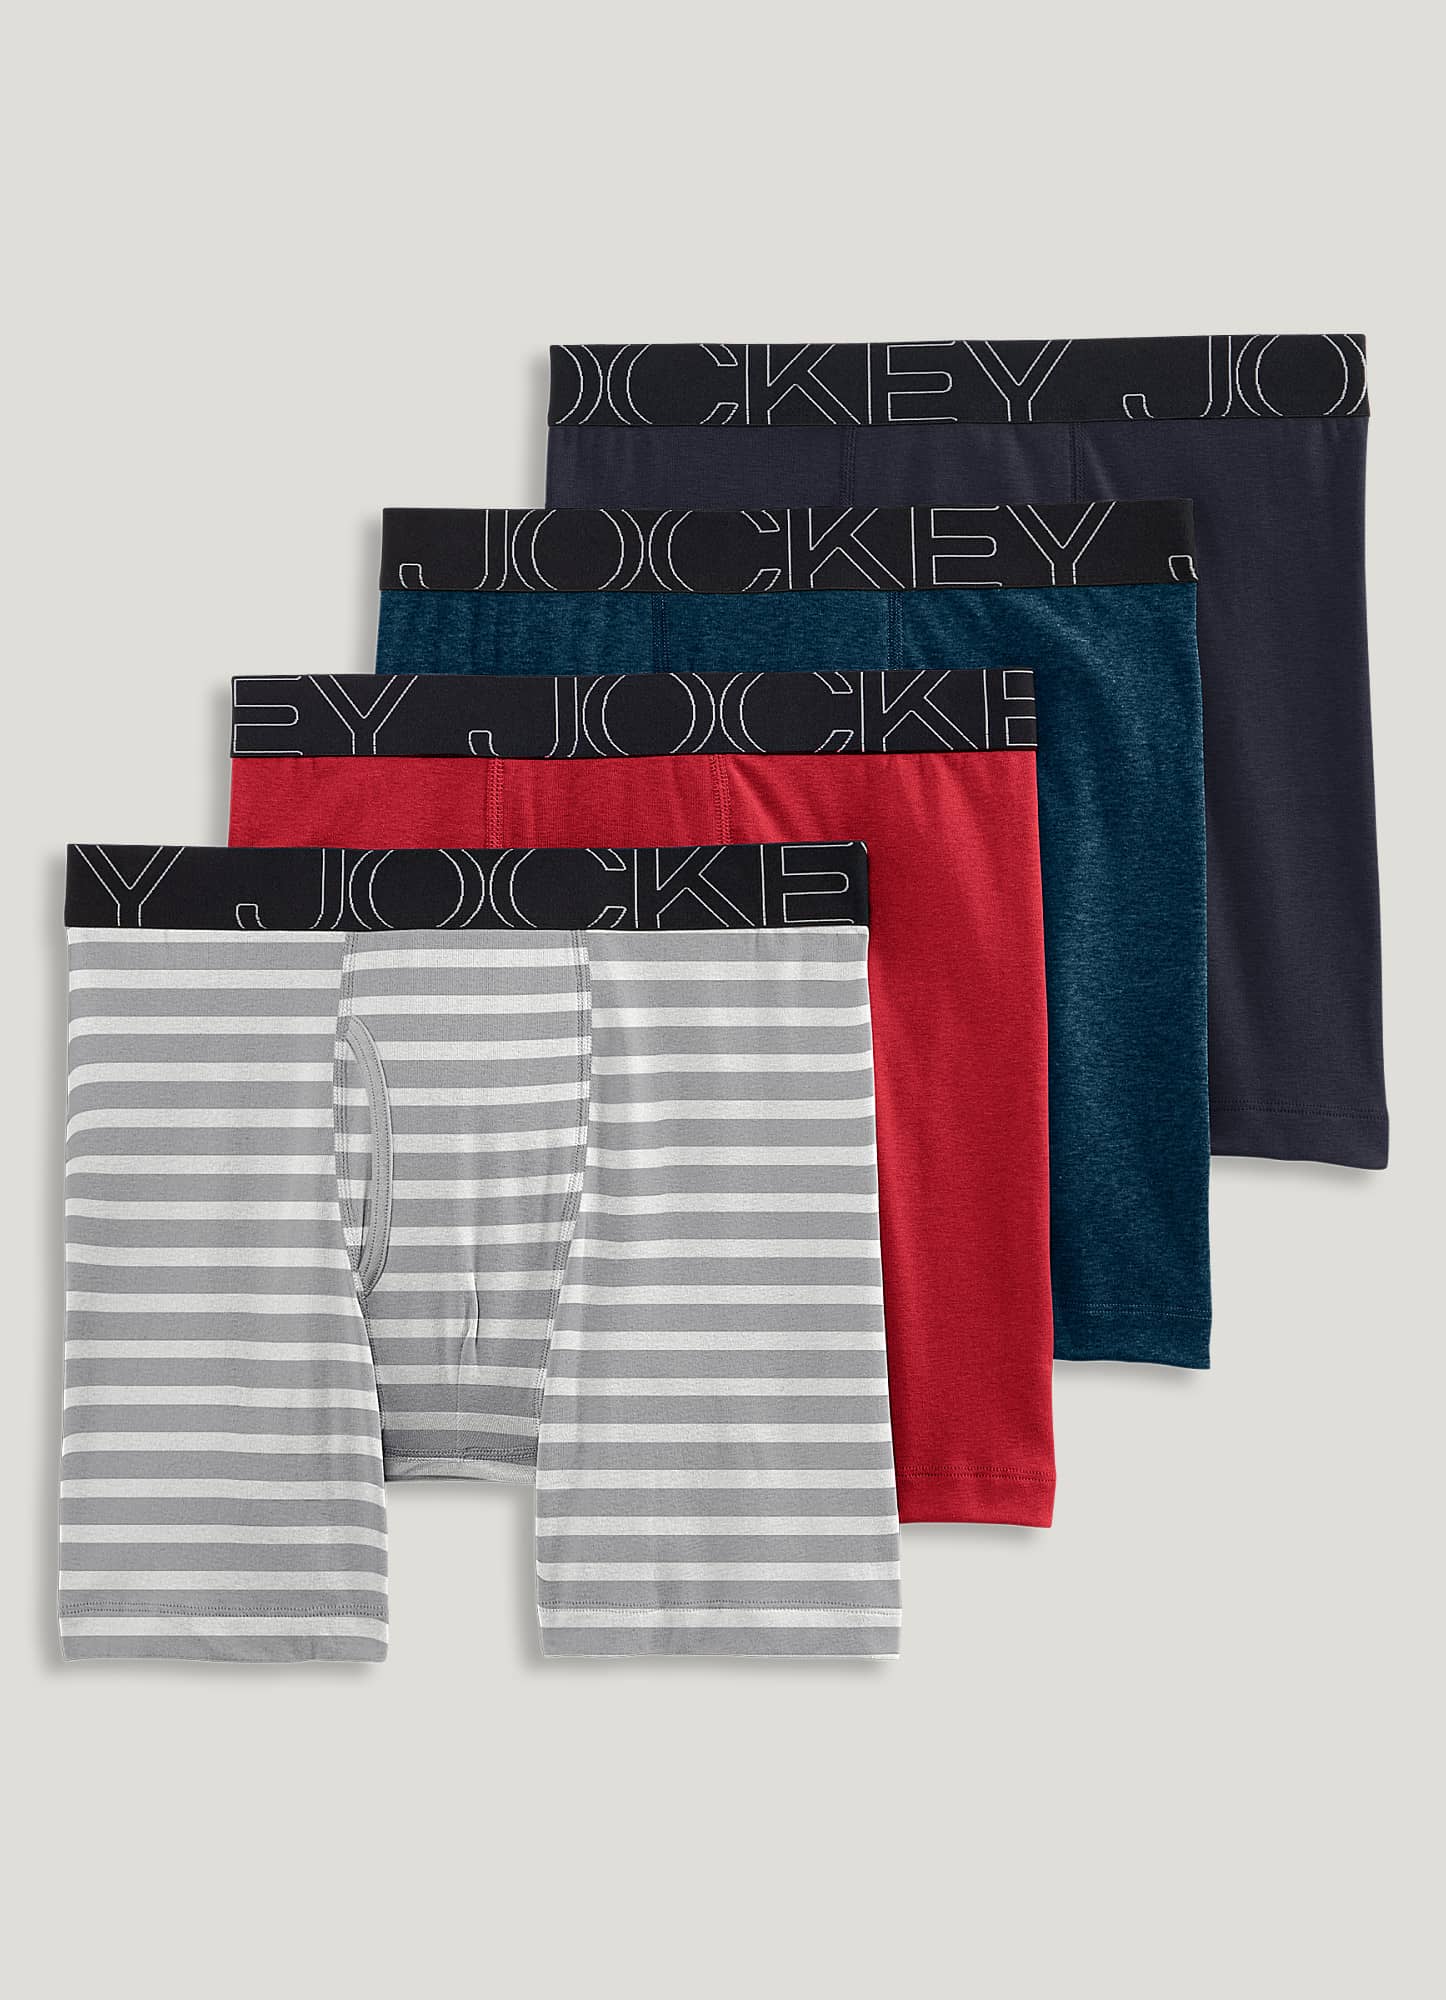 Jockey Men's Underwear Sport Microfiber 10 Midway Brief : :  Clothing, Shoes & Accessories